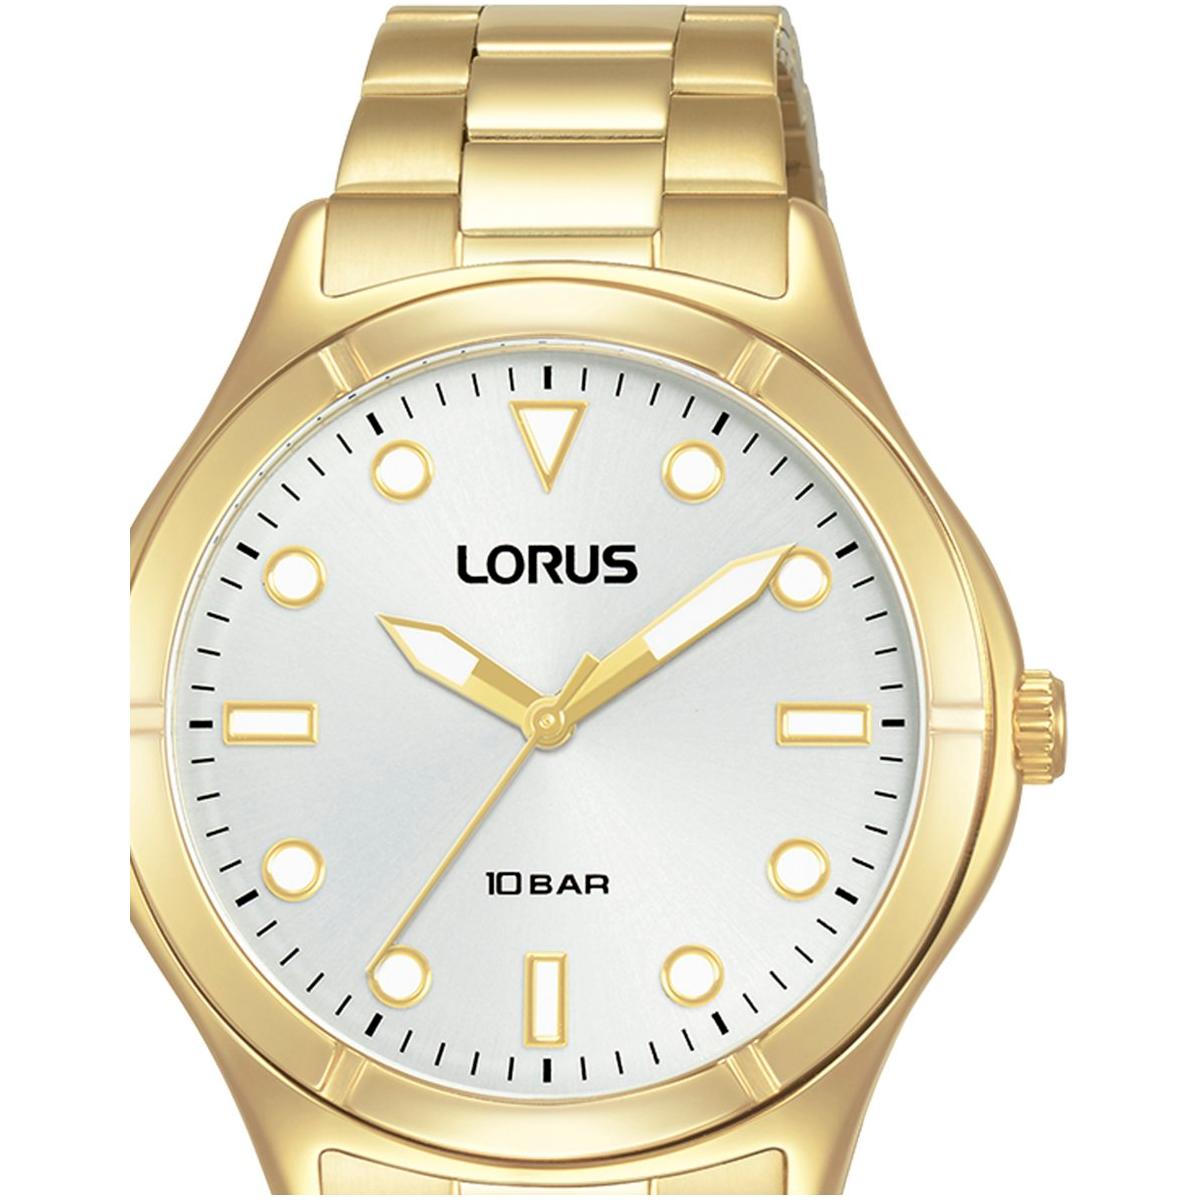 LORUS LORUS WATCHES Mod. RG248VX9 WATCHES lorus-watches-mod-rg248vx9